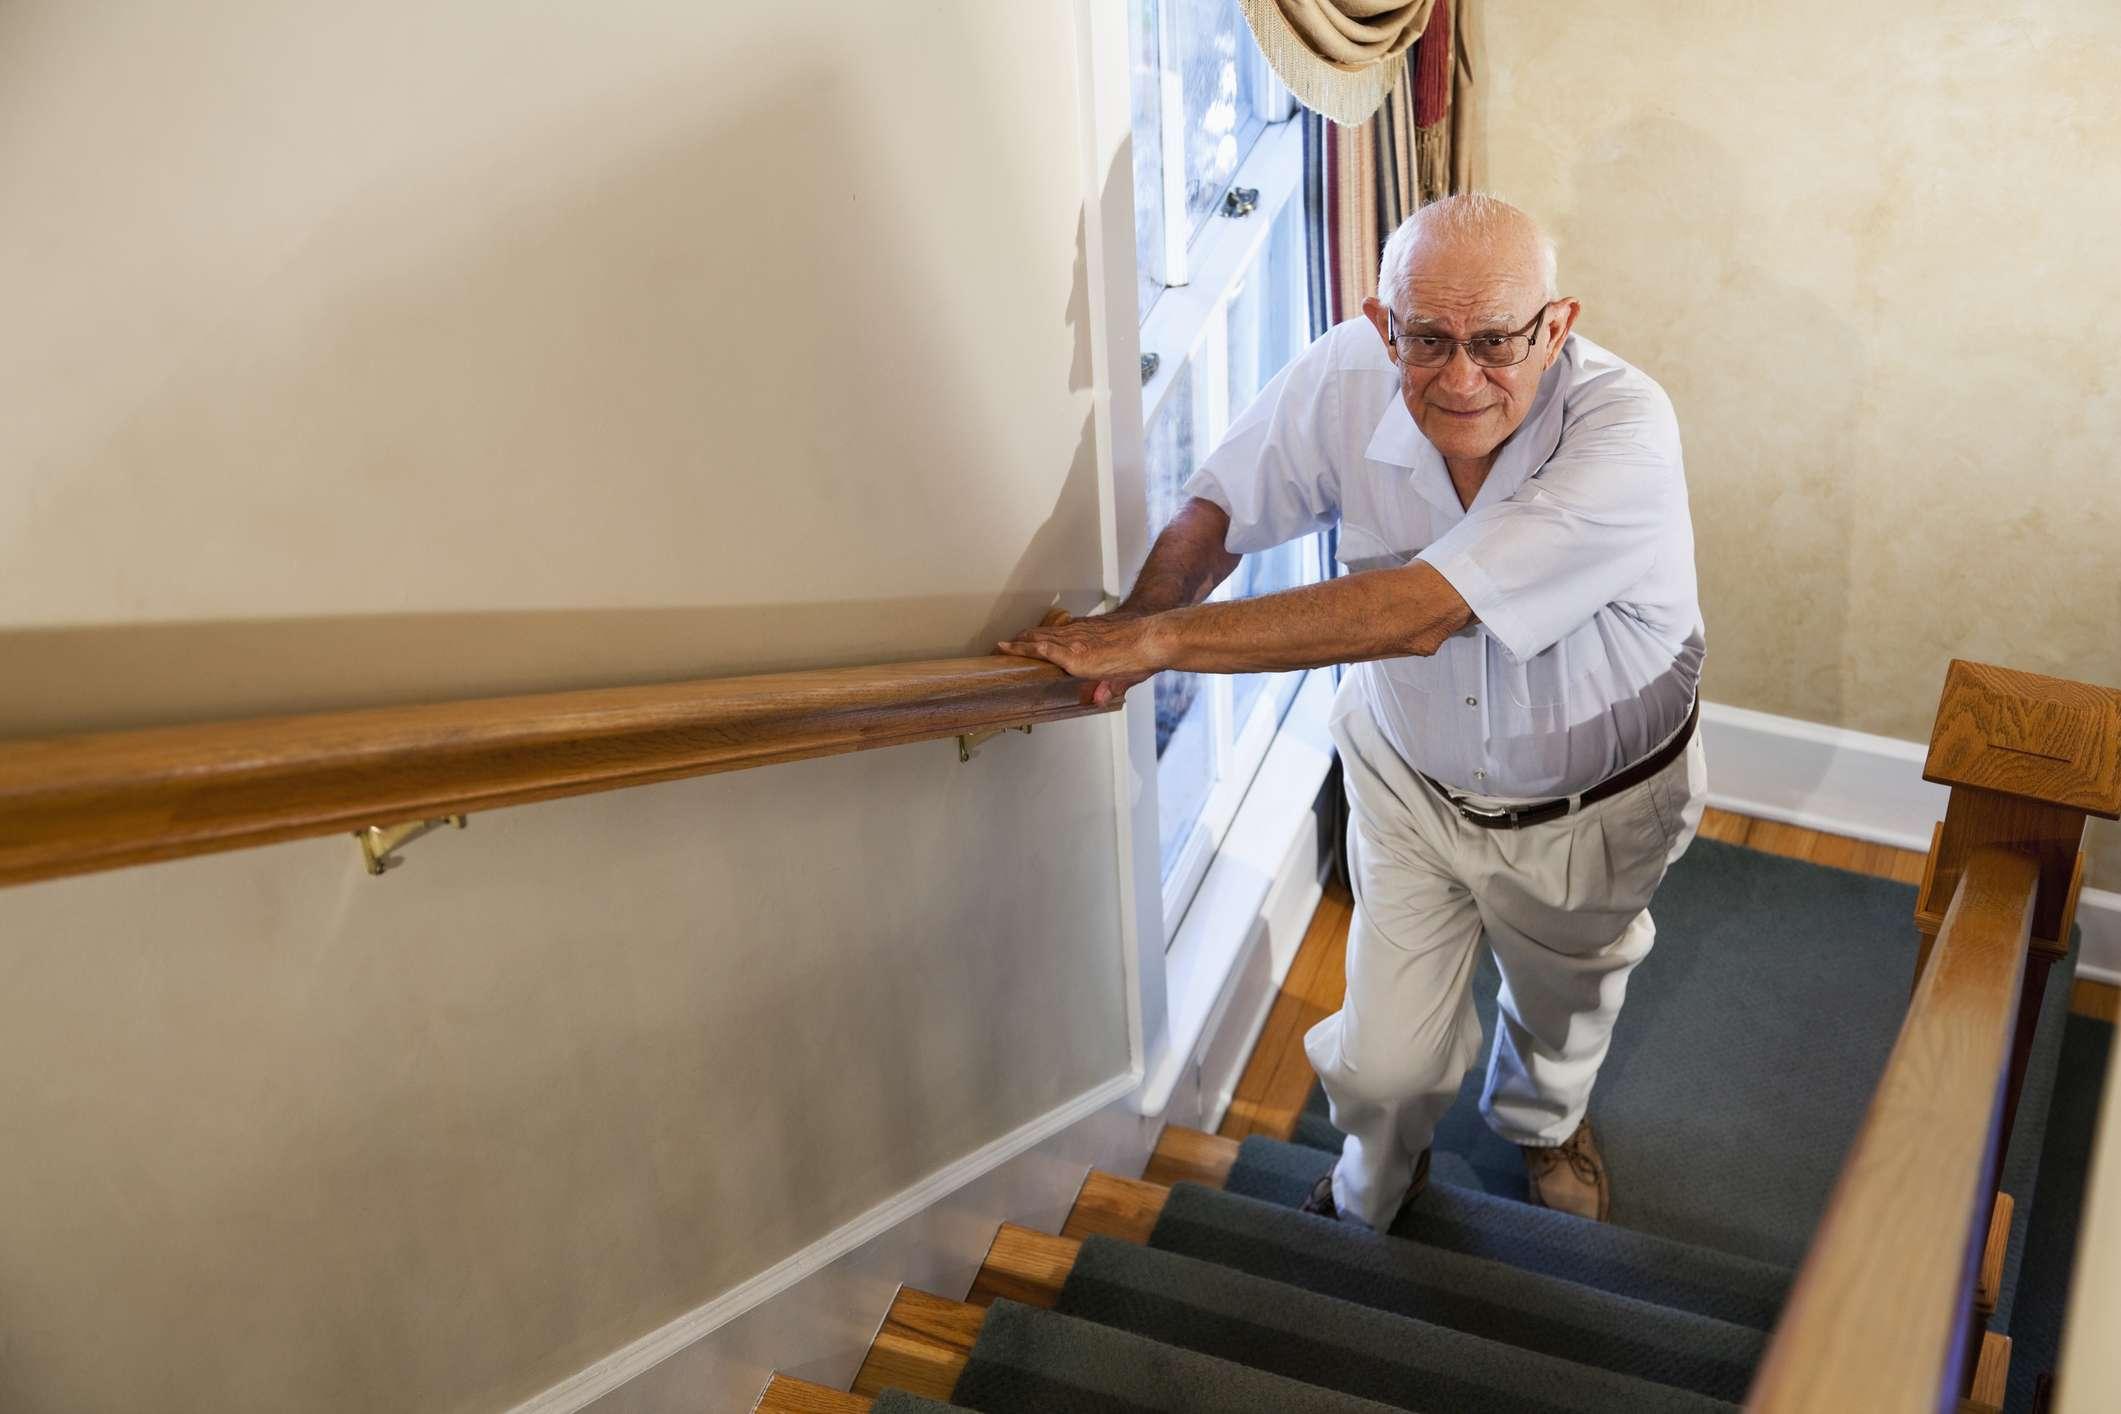 Senior Mann (80er) beim Treppensteigen.